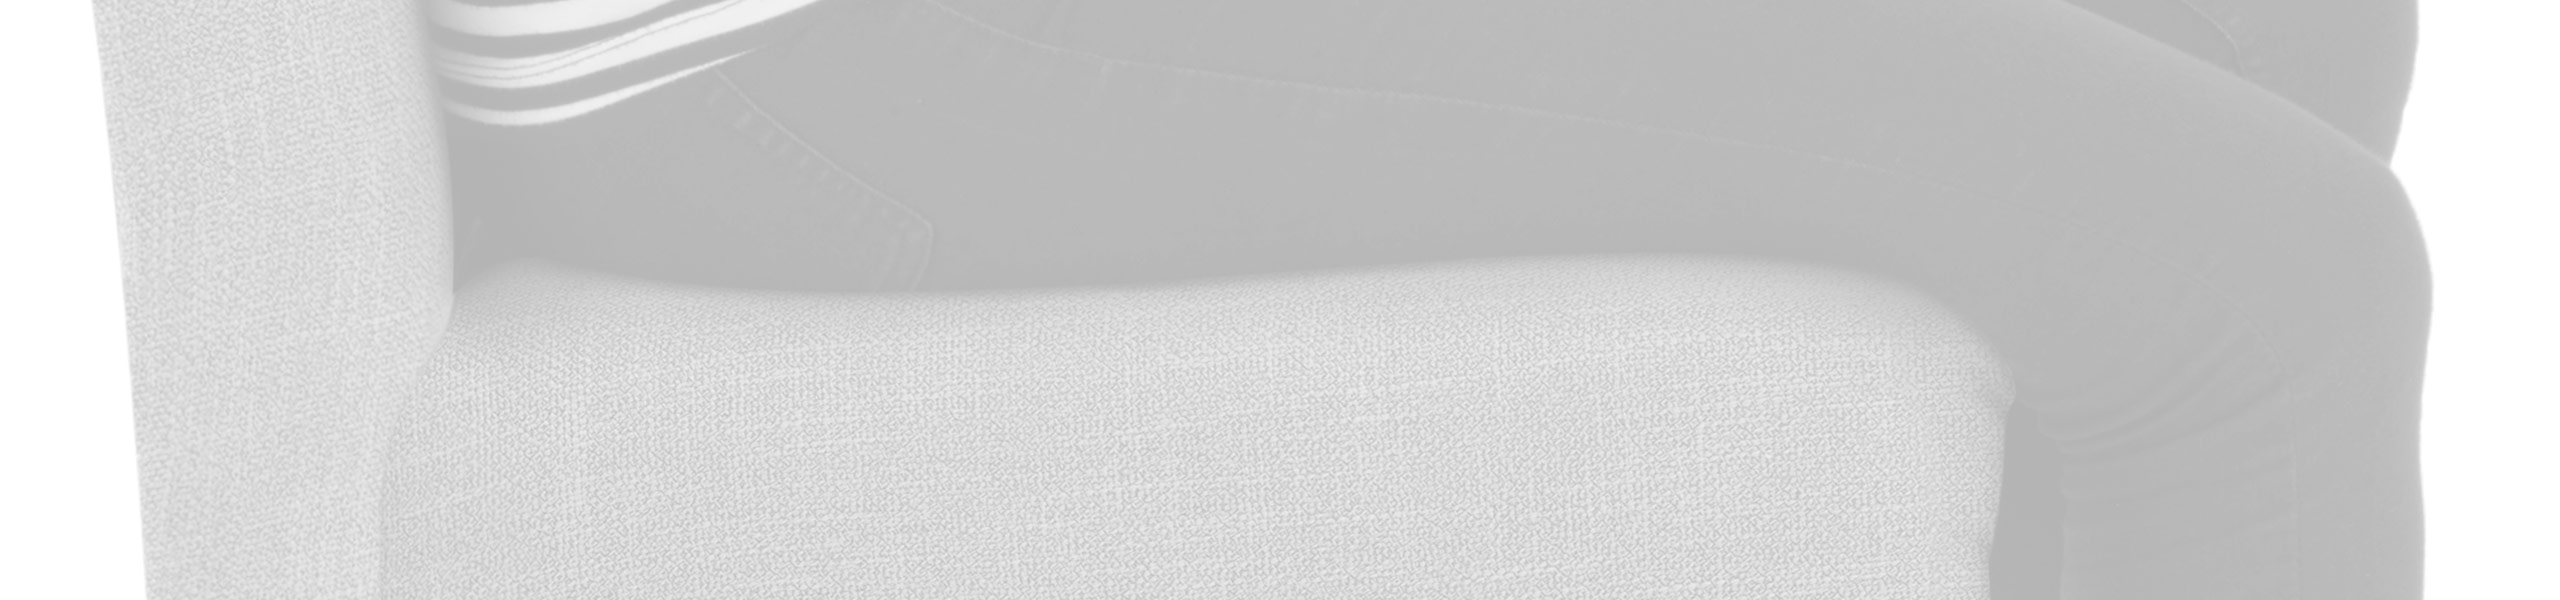 Barrington Oak Stool Grey Fabric Review Banner